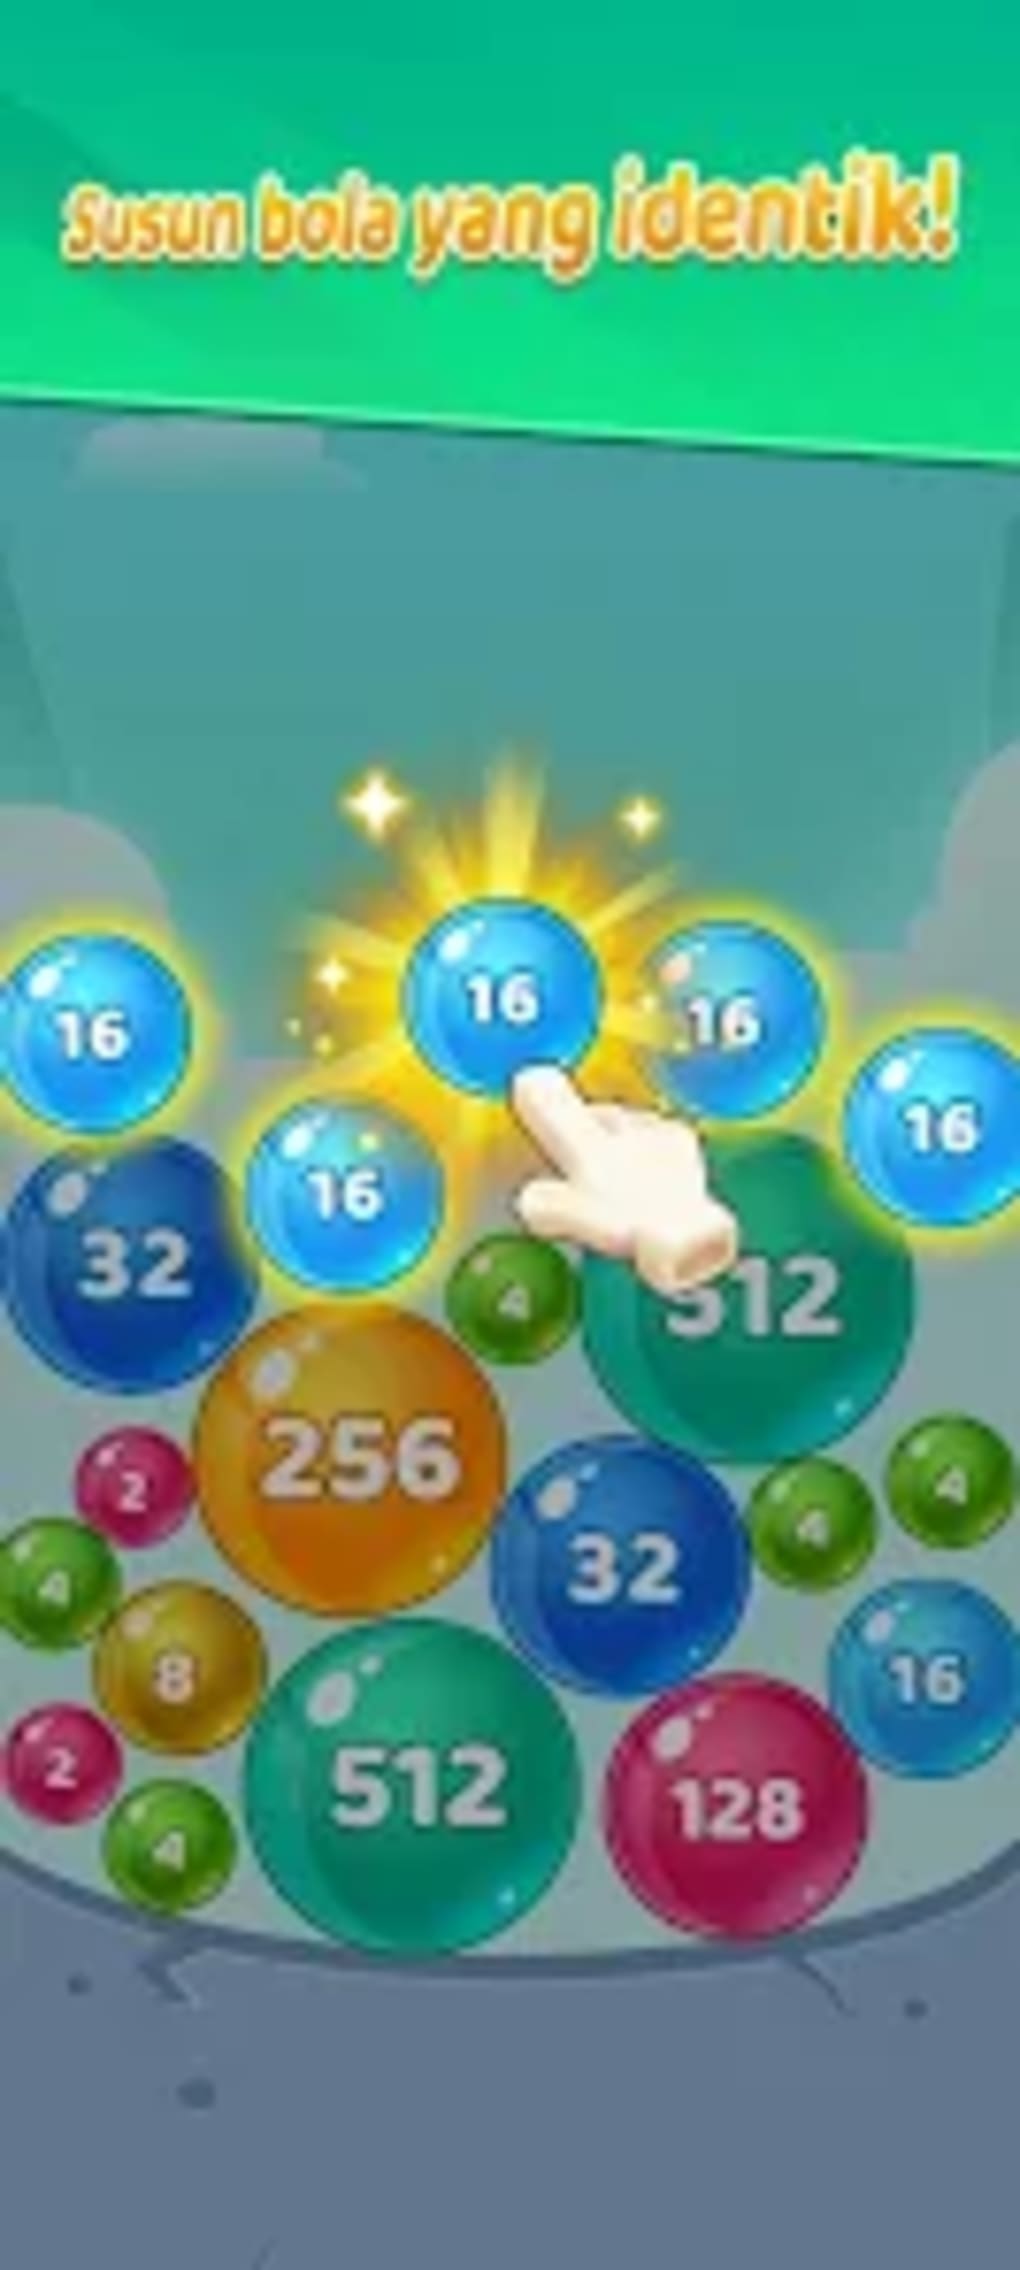 Bubble – Um jogo clássico para Android